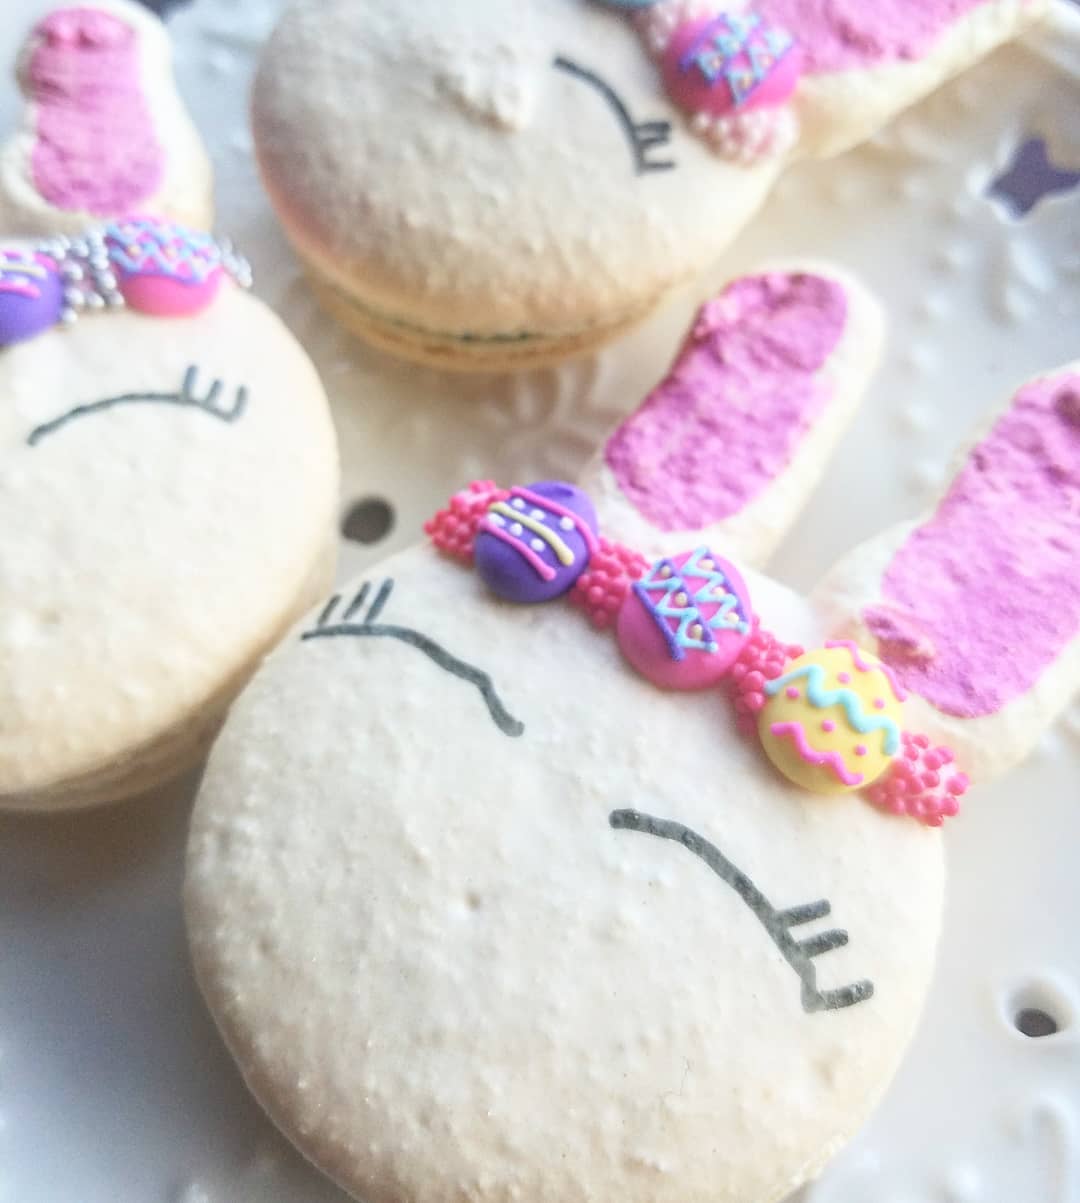 Bunni-corns, Uni-buns, Bunni-macs…or just CUTE!
🐰
Available now or by pre-order for Easter 405 430 5484
🐰
@bellekitchenokc #macaron #macarons #bunny #bunnies #food #foodie #foodporn #instafood #instagood #easter #bunniesofinstagram #yum #keepitlocalok #pastry #dessert #okcmoms #donutscookiesandcream #cute #beautiful #bellekitchen